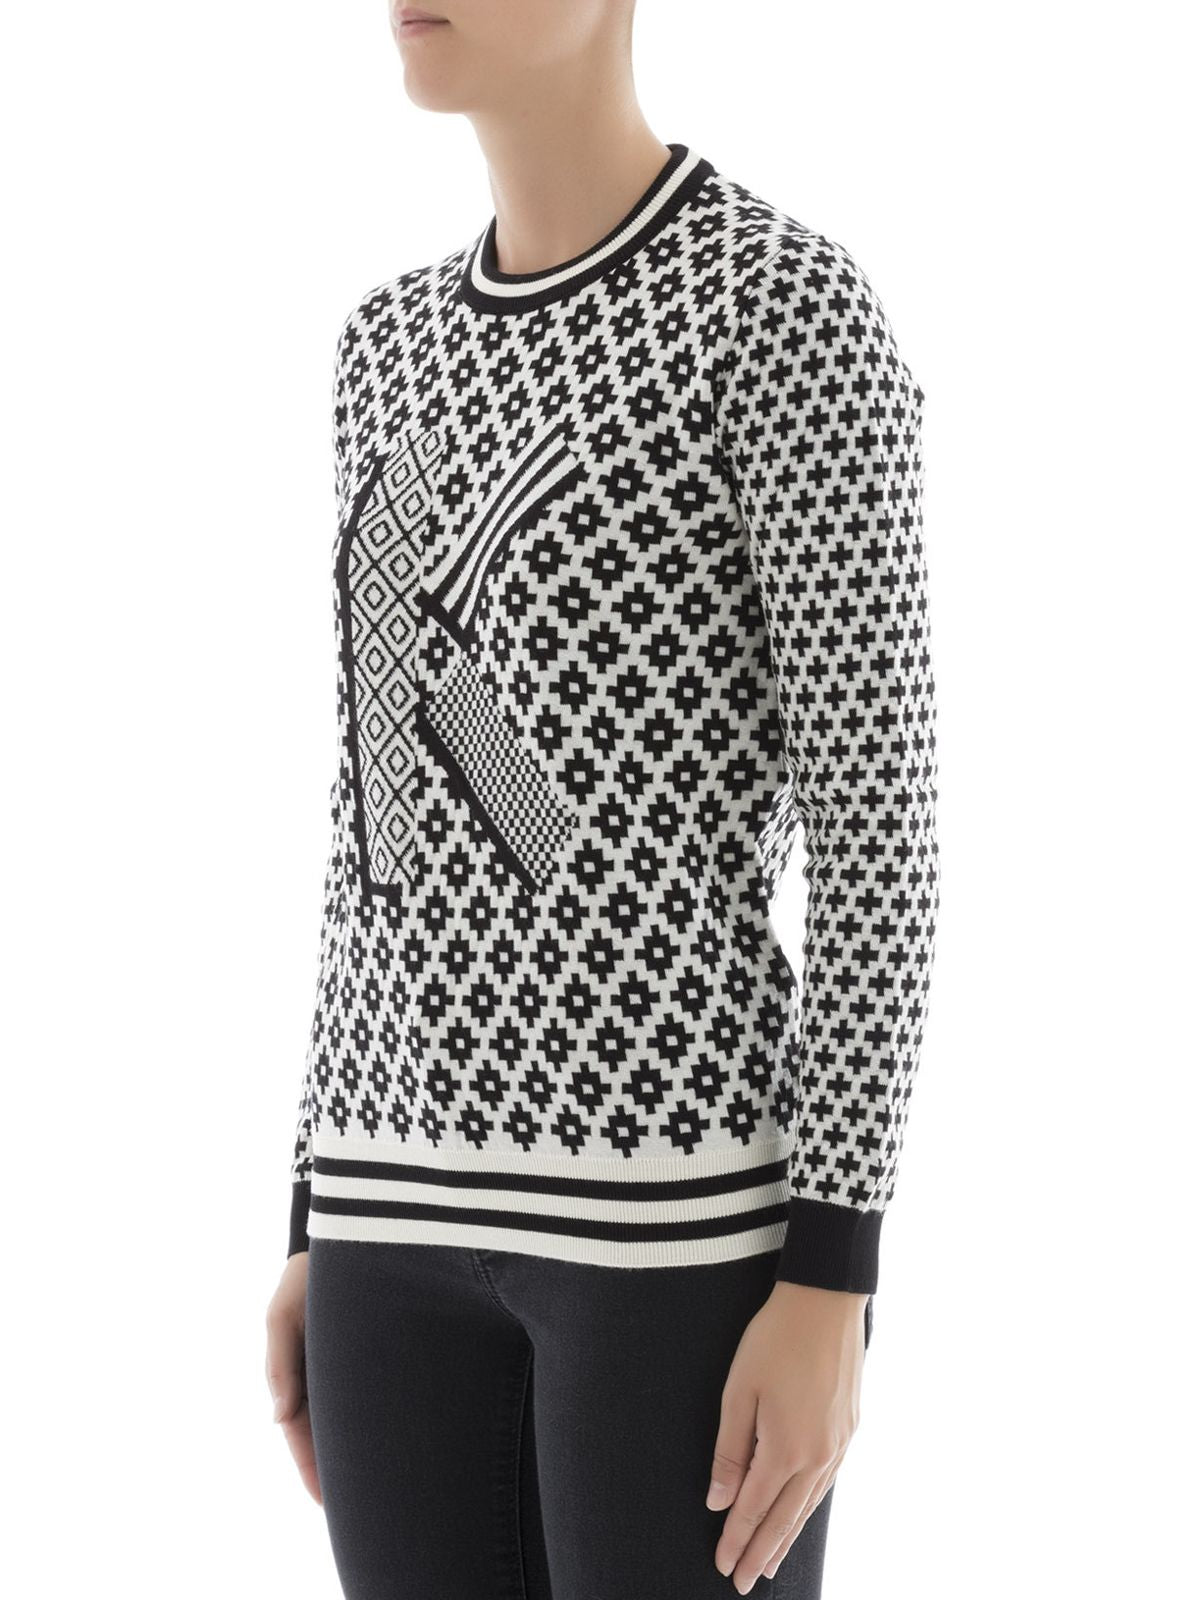 Iconic Monochrome Roundneck Cotton Sweater